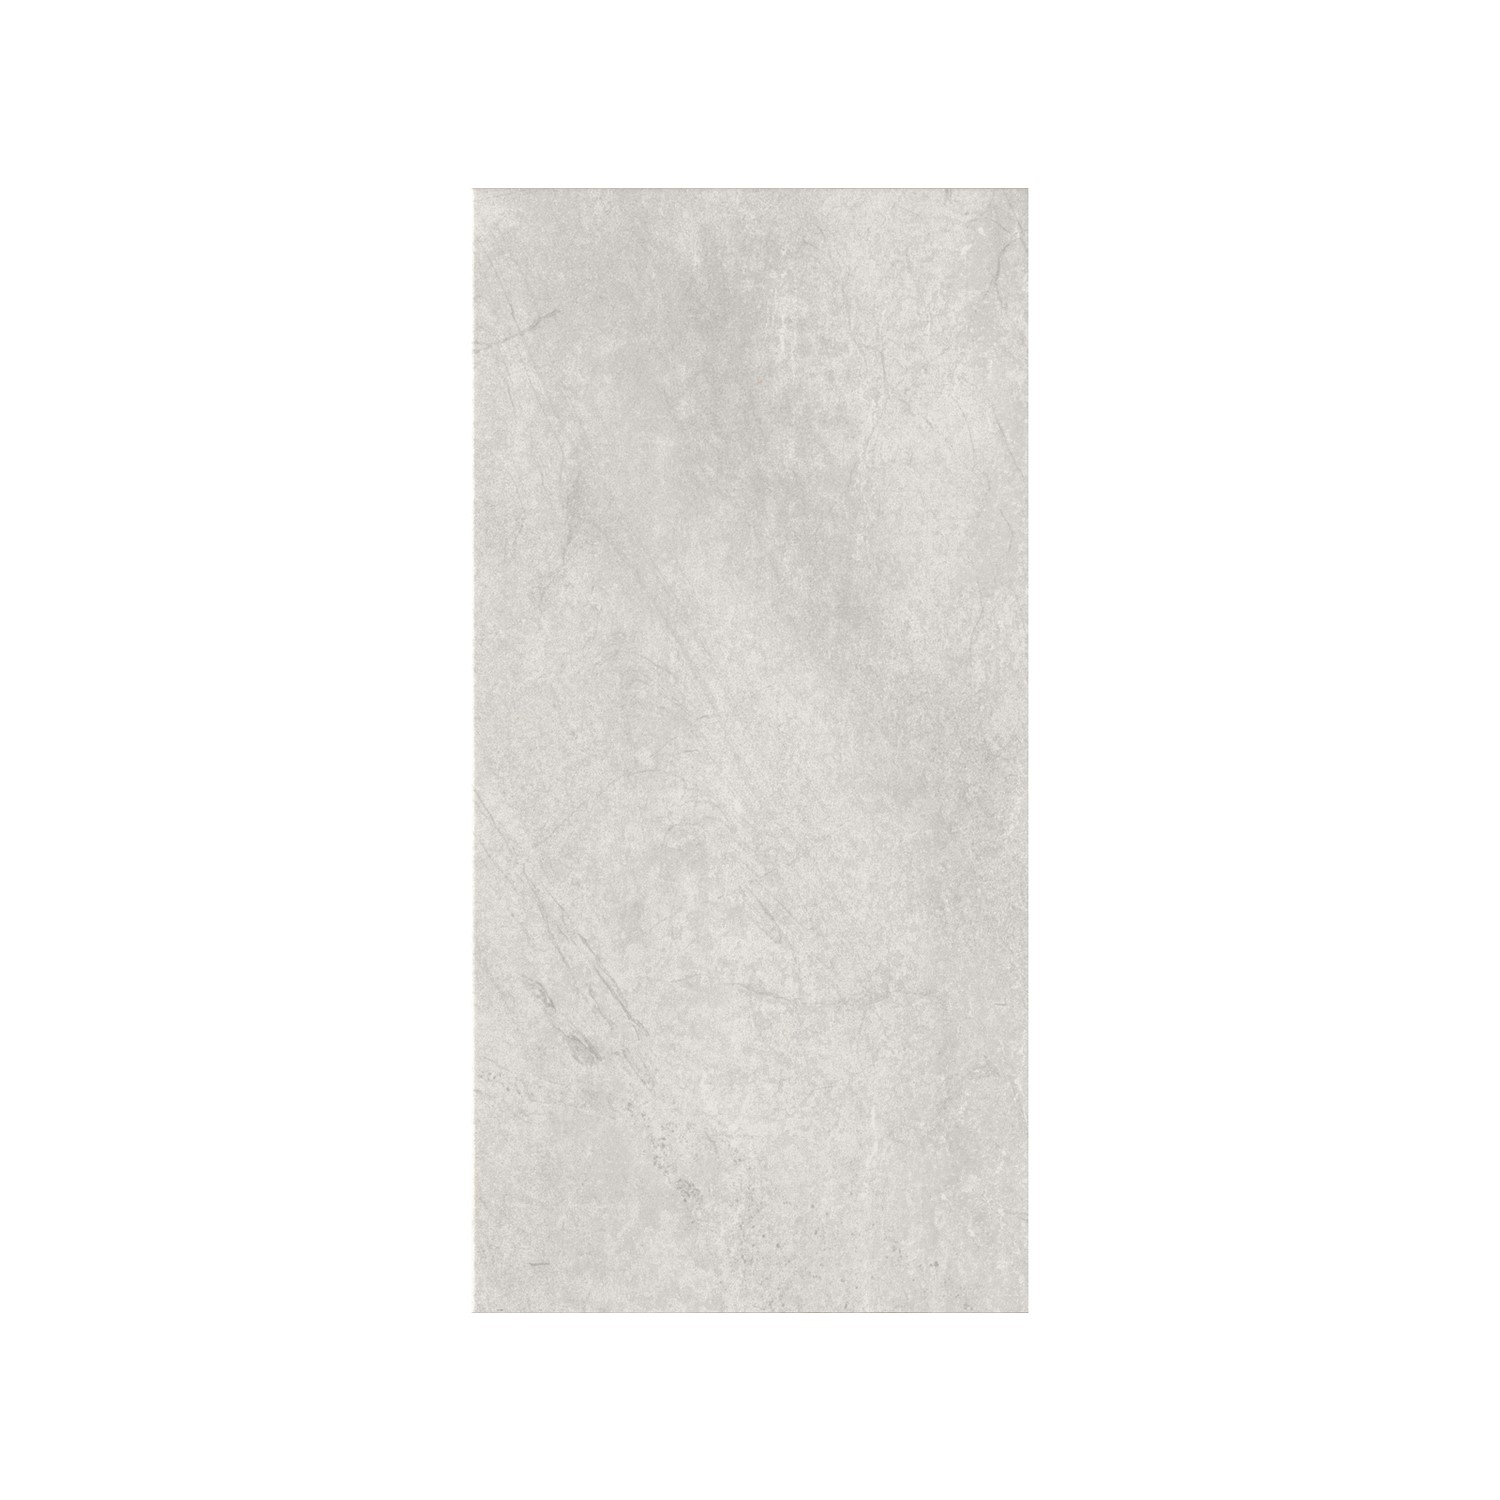 Light Grey Stone Effect Wall Tile 30 x 60cm - Carlisle